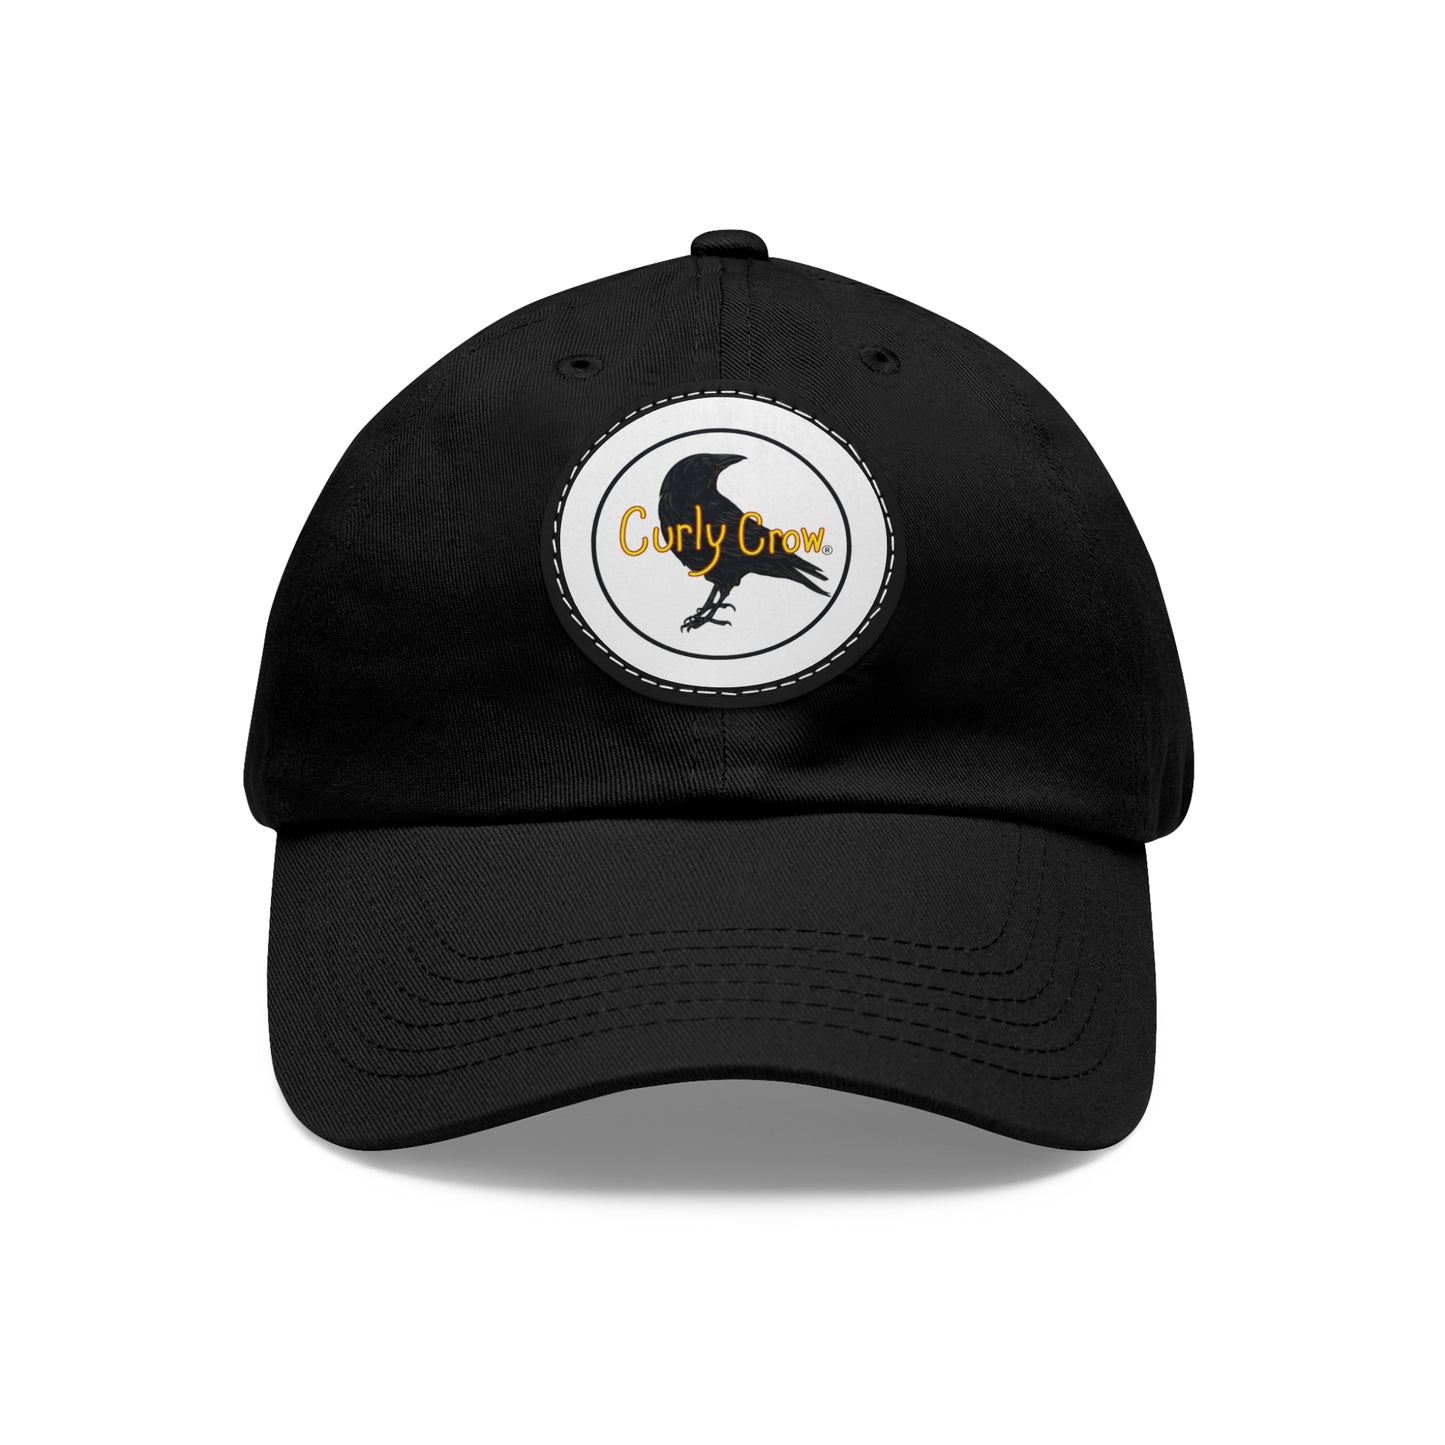 Curly Crow cap - black baseball hat